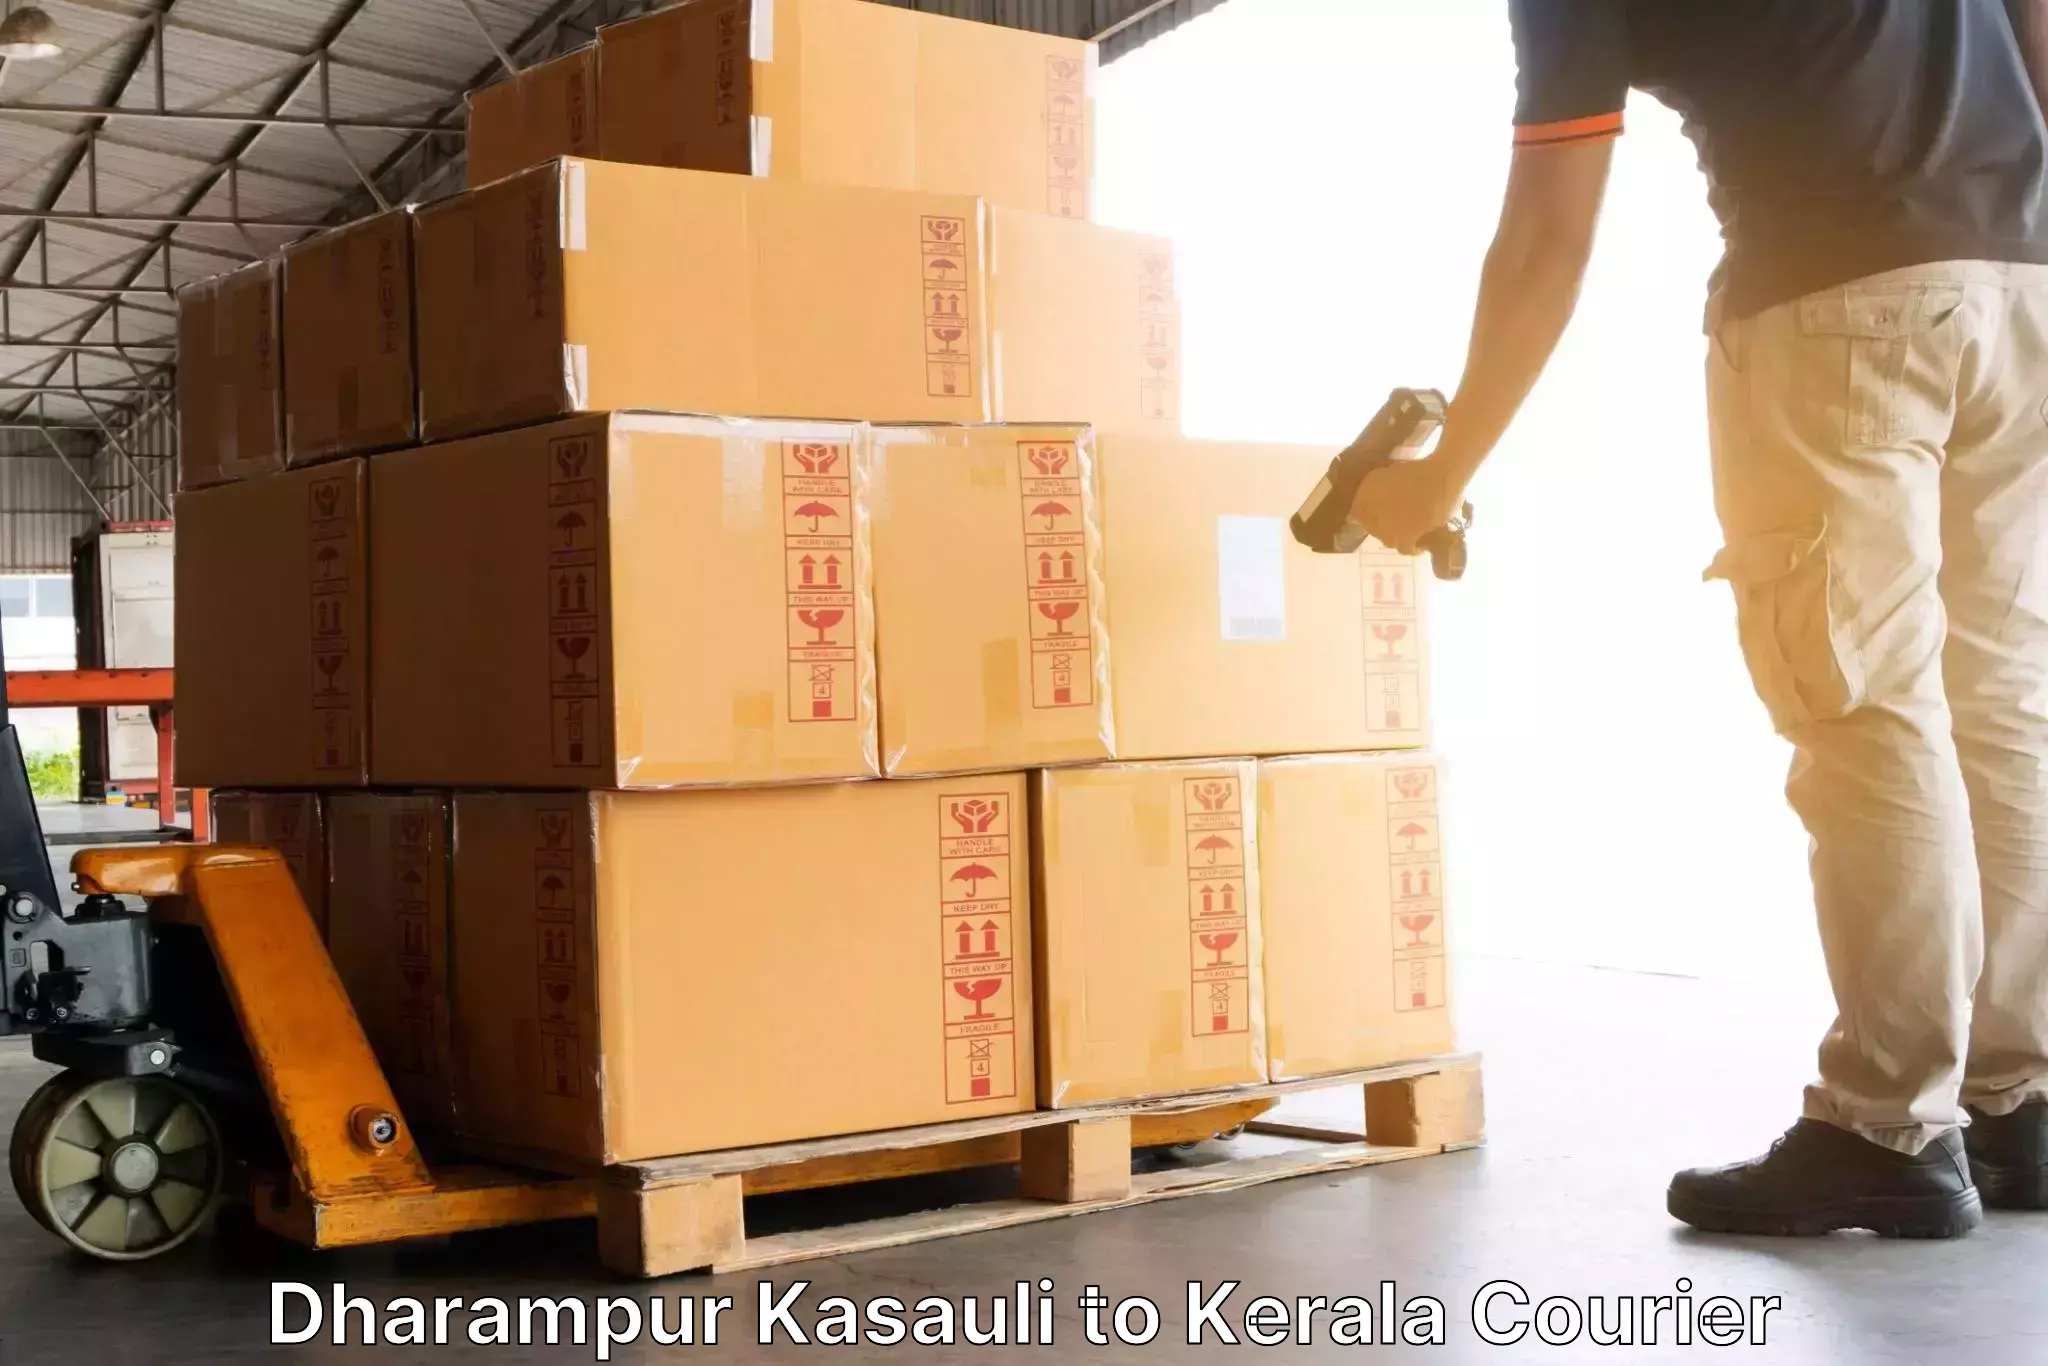 Express logistics providers Dharampur Kasauli to Kozhikode